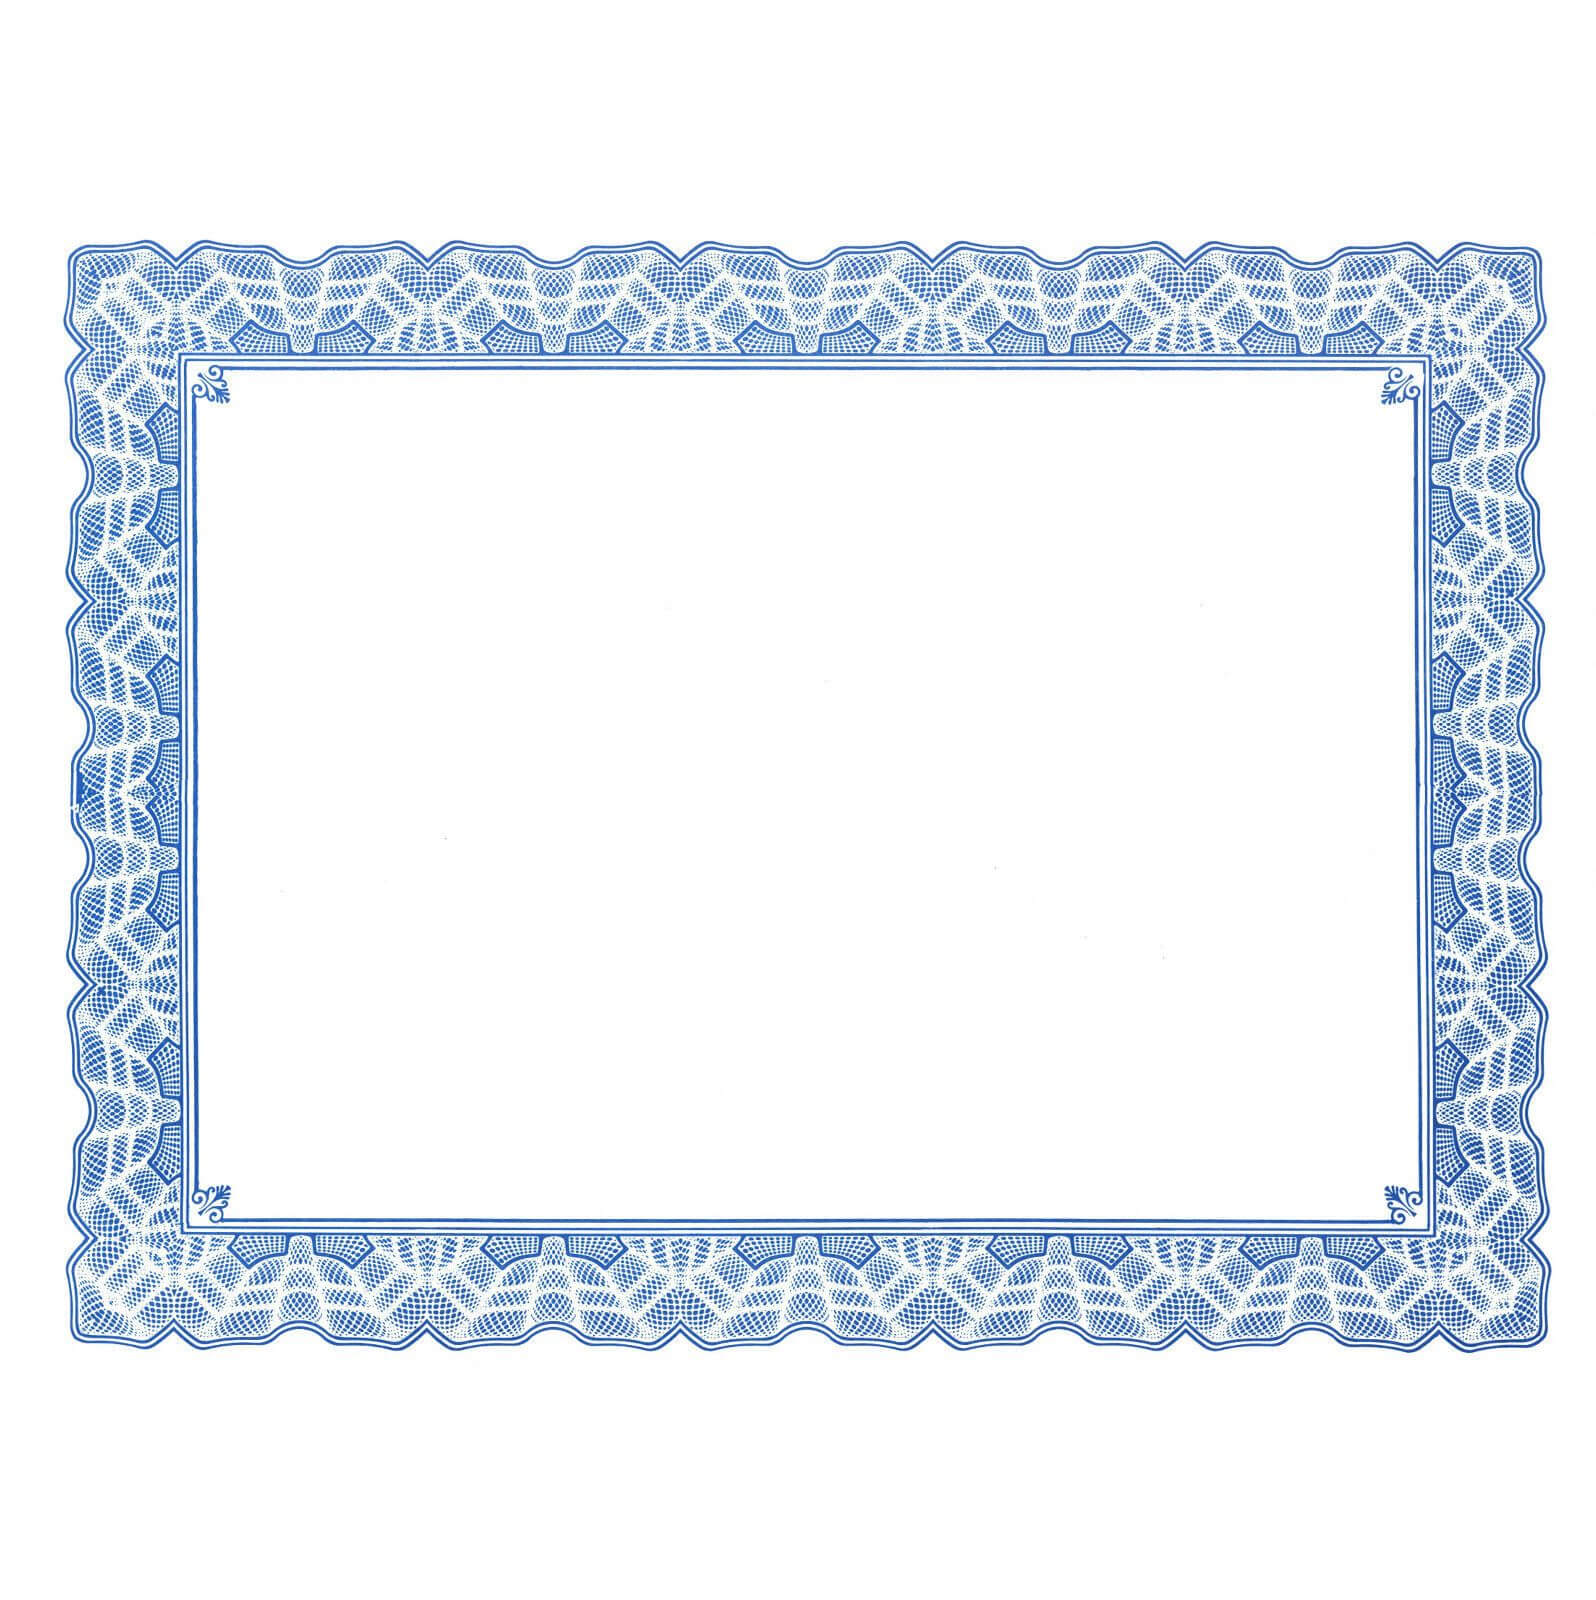 Printable Award Certificates Blank | Award Recognition Throughout Award Certificate Border Template